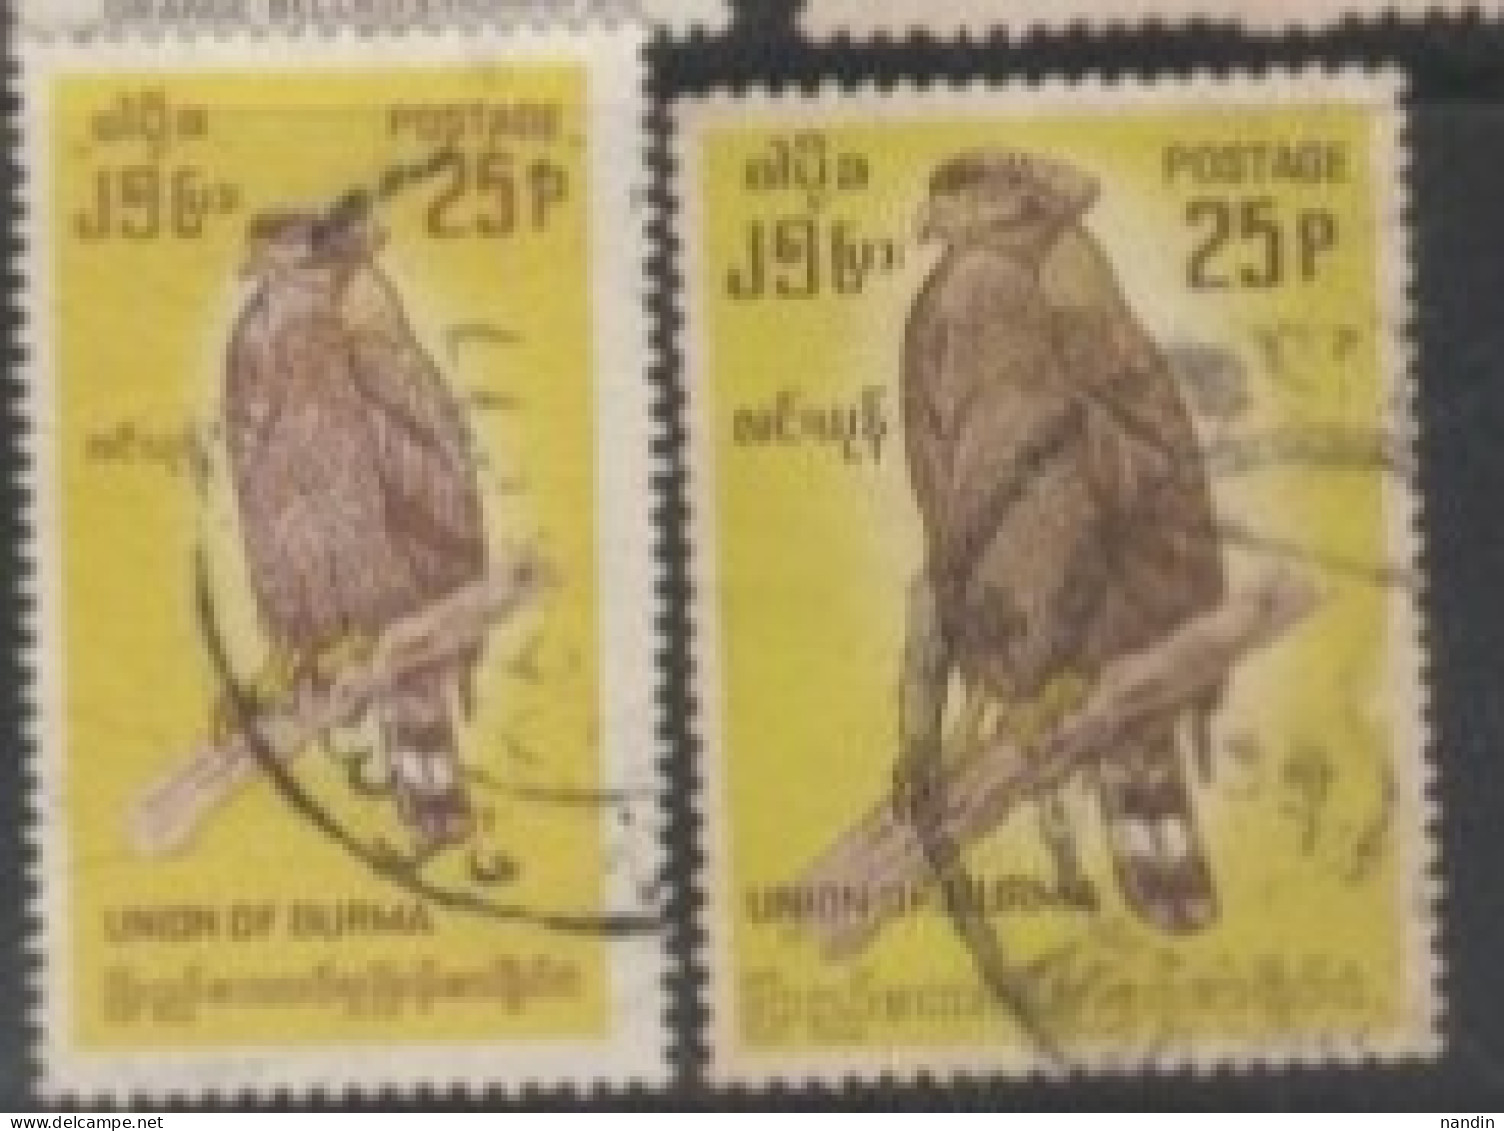 1964-68 BURMA USED STAMP ON BIRD/ Spilornis Cheela Burmanicus-Eagle - Eagles & Birds Of Prey